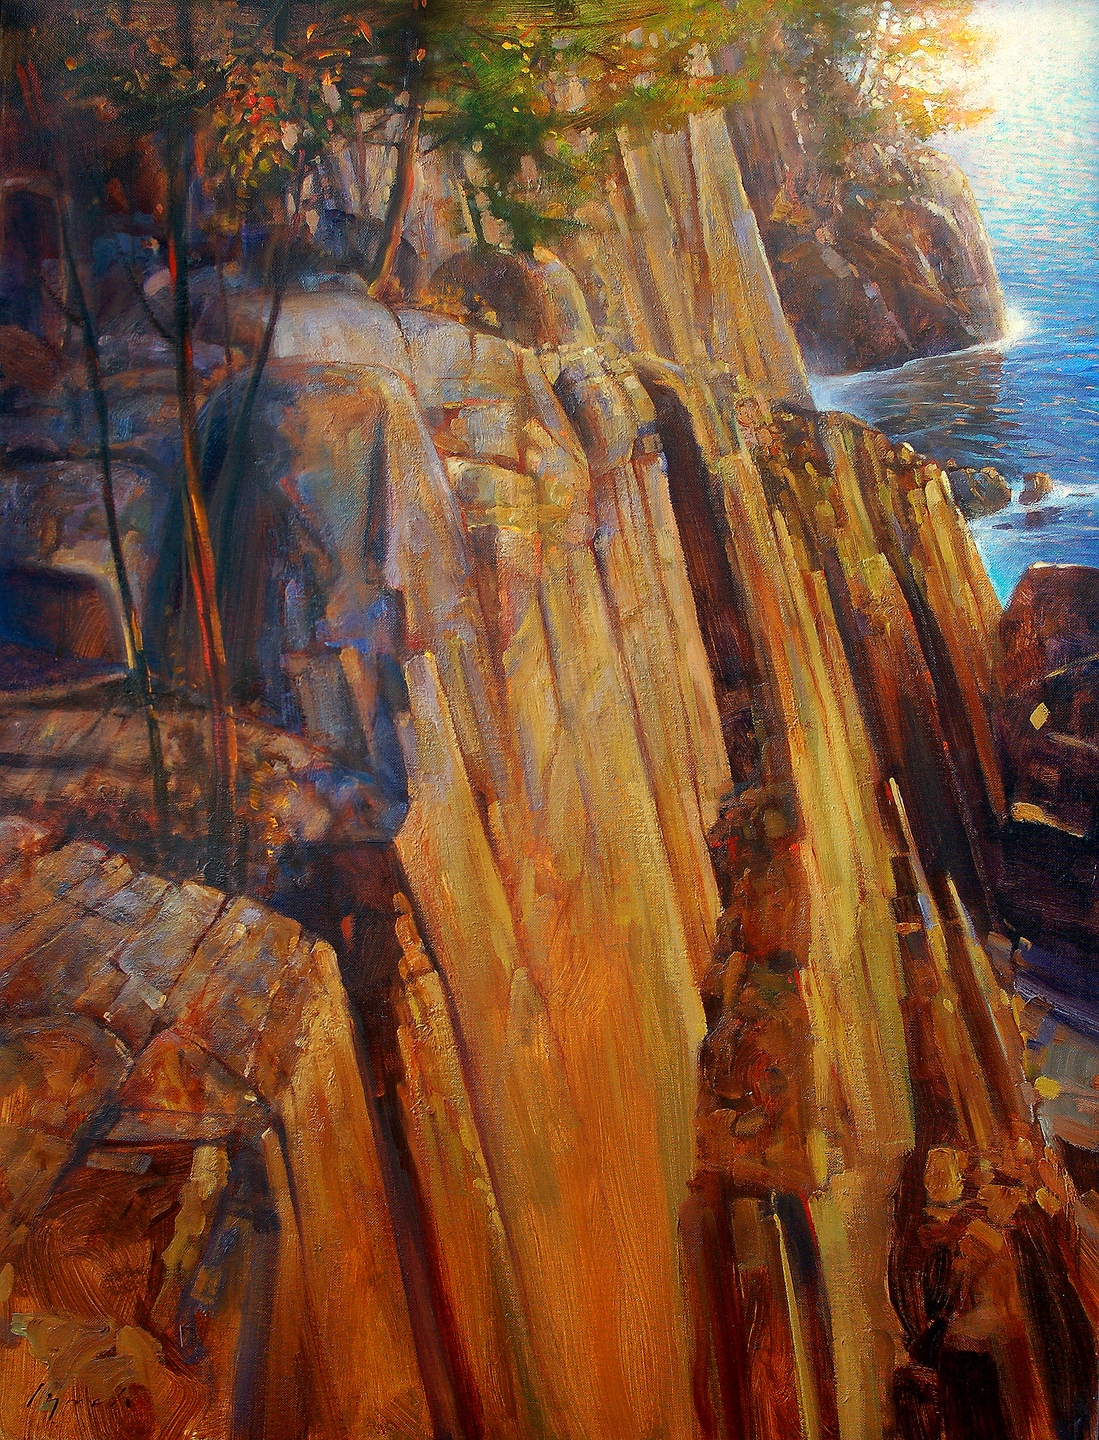 'Golden Cliffs' 36 X 48 in. oil on canvas. studio. SOLD copyright Brent Lynch